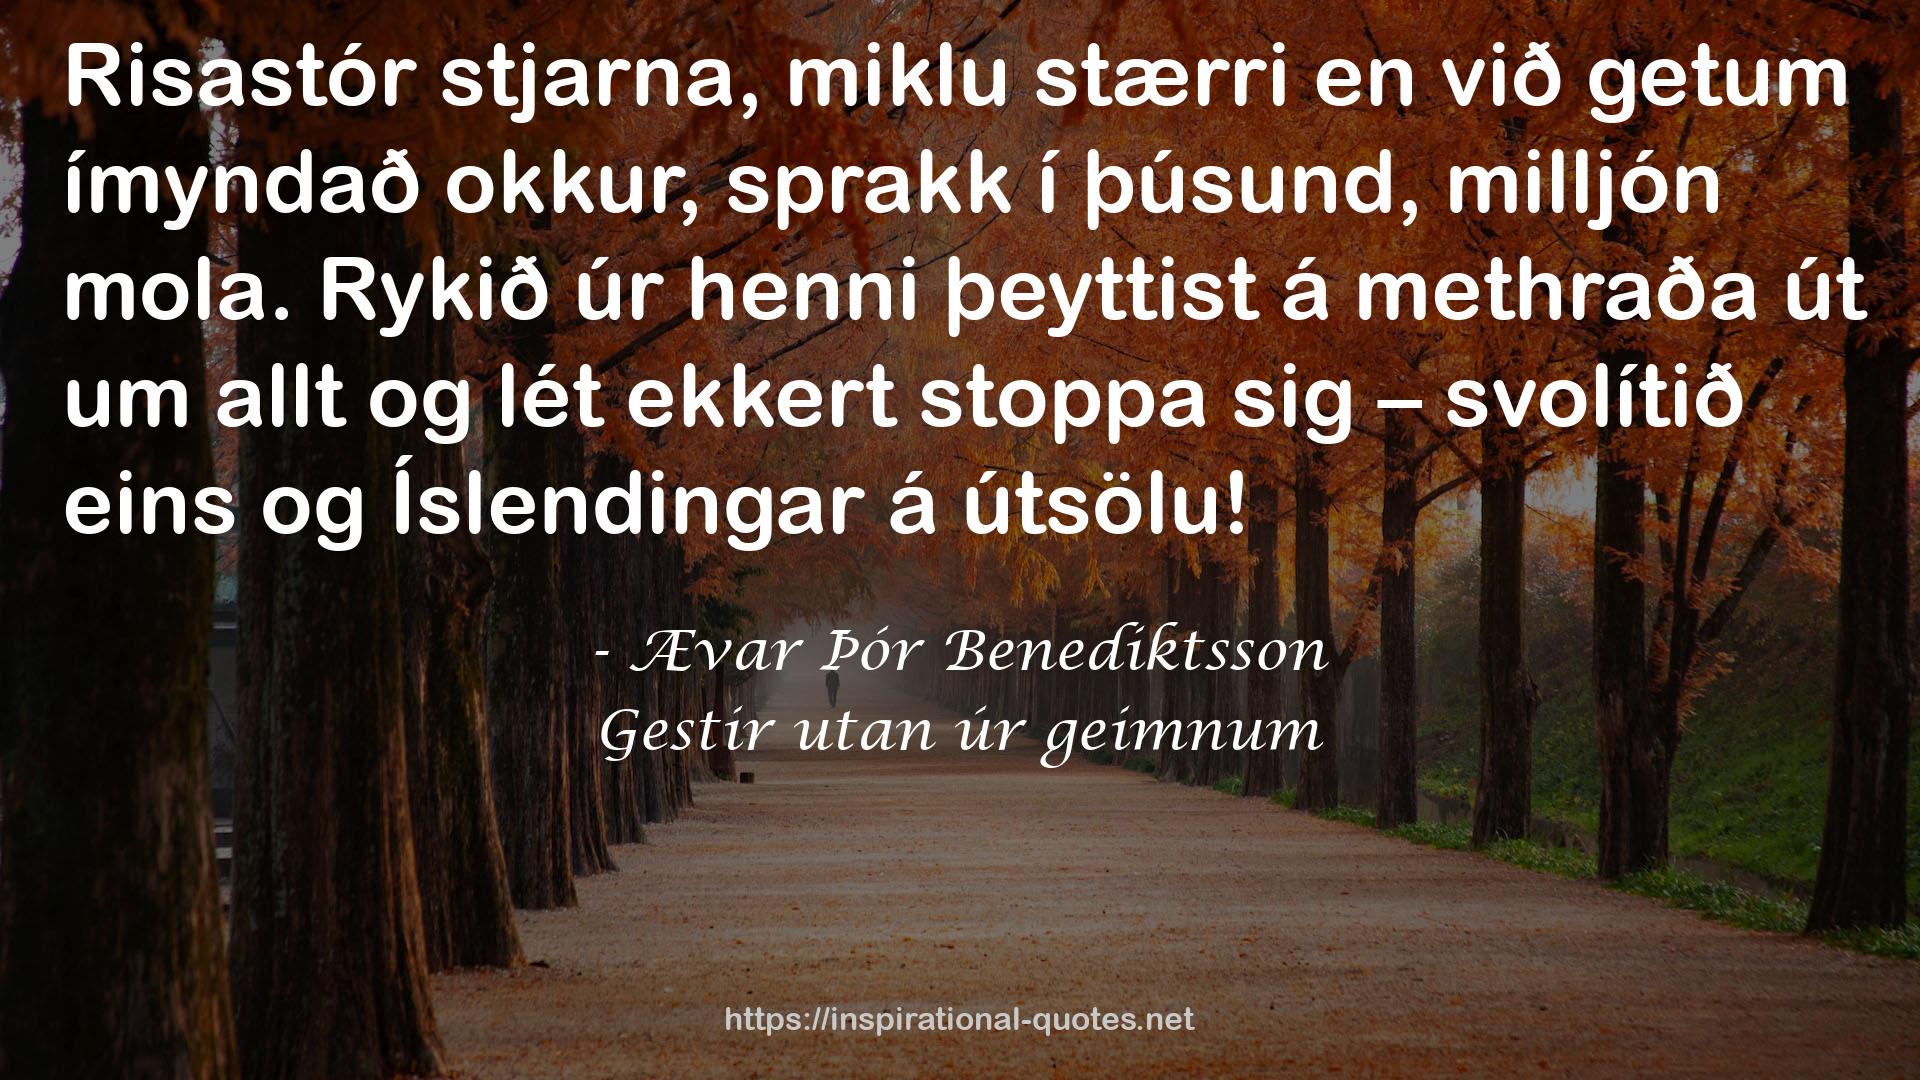 Ævar Þór Benediktsson QUOTES